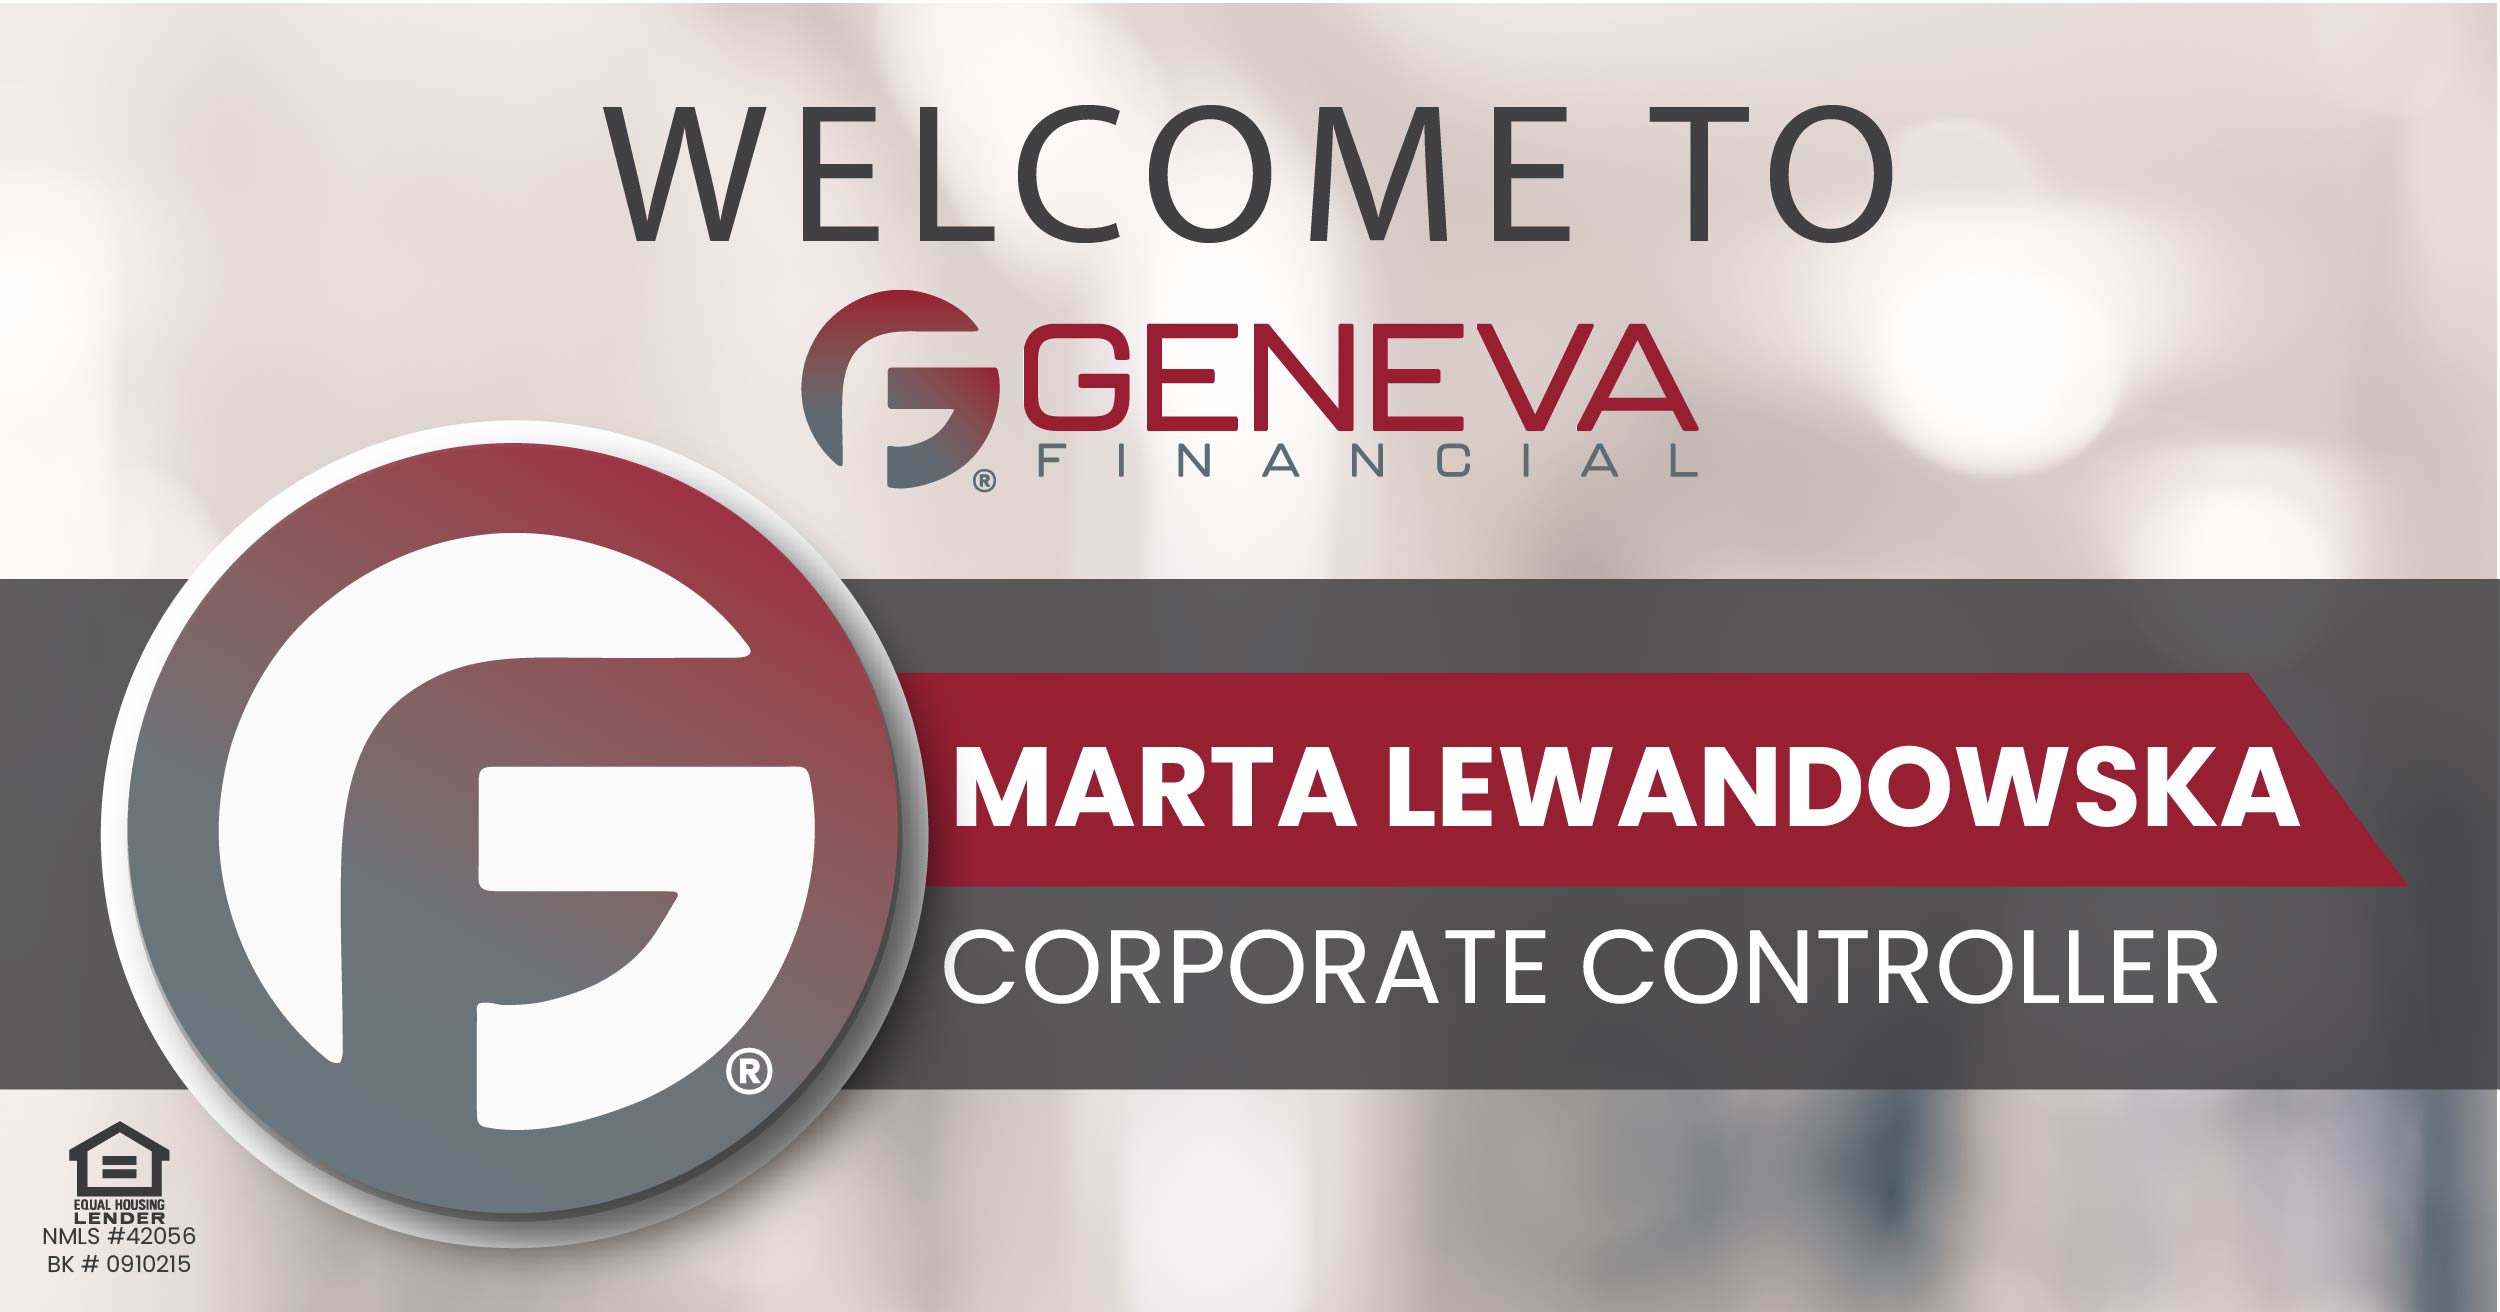 Geneva Financial Welcomes New Controller Marta Lewandowska to Geneva Corporate – Home Loans Powered by Humans®.